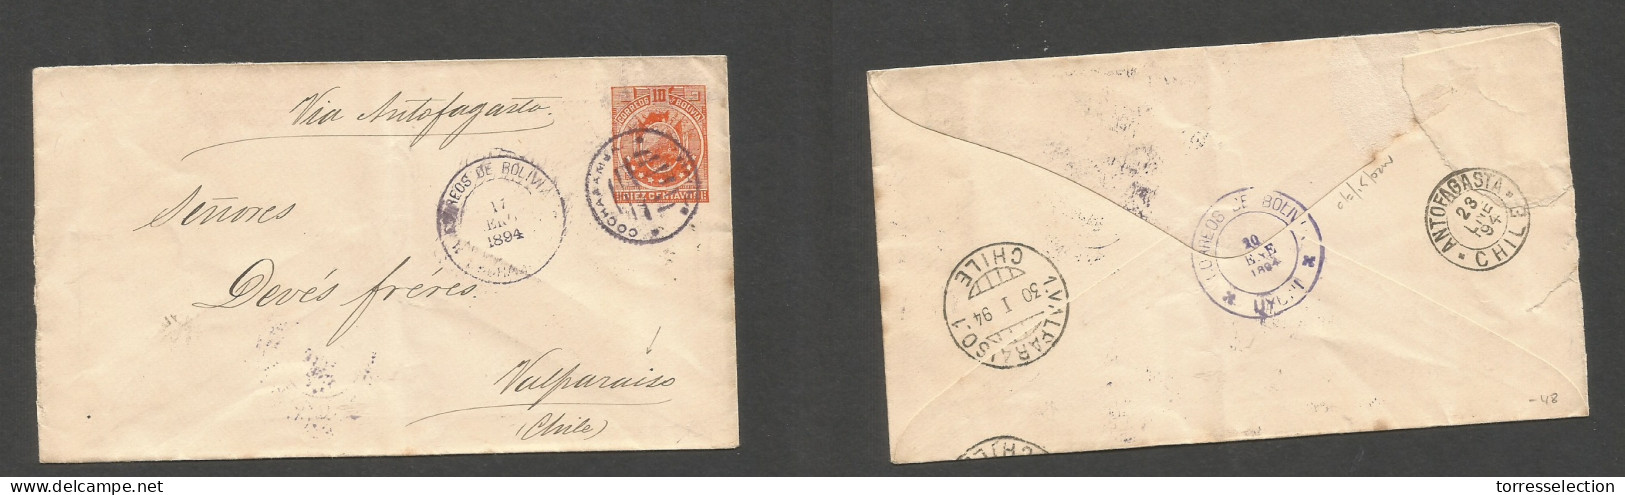 BOLIVIA. 1894 (17 Ene) Cochahamba - Chile, Valparaiso (30 Jan) Via Antofagasta - Ujuny, 10c Orange Stat Env. Fine. SALE. - Bolivia